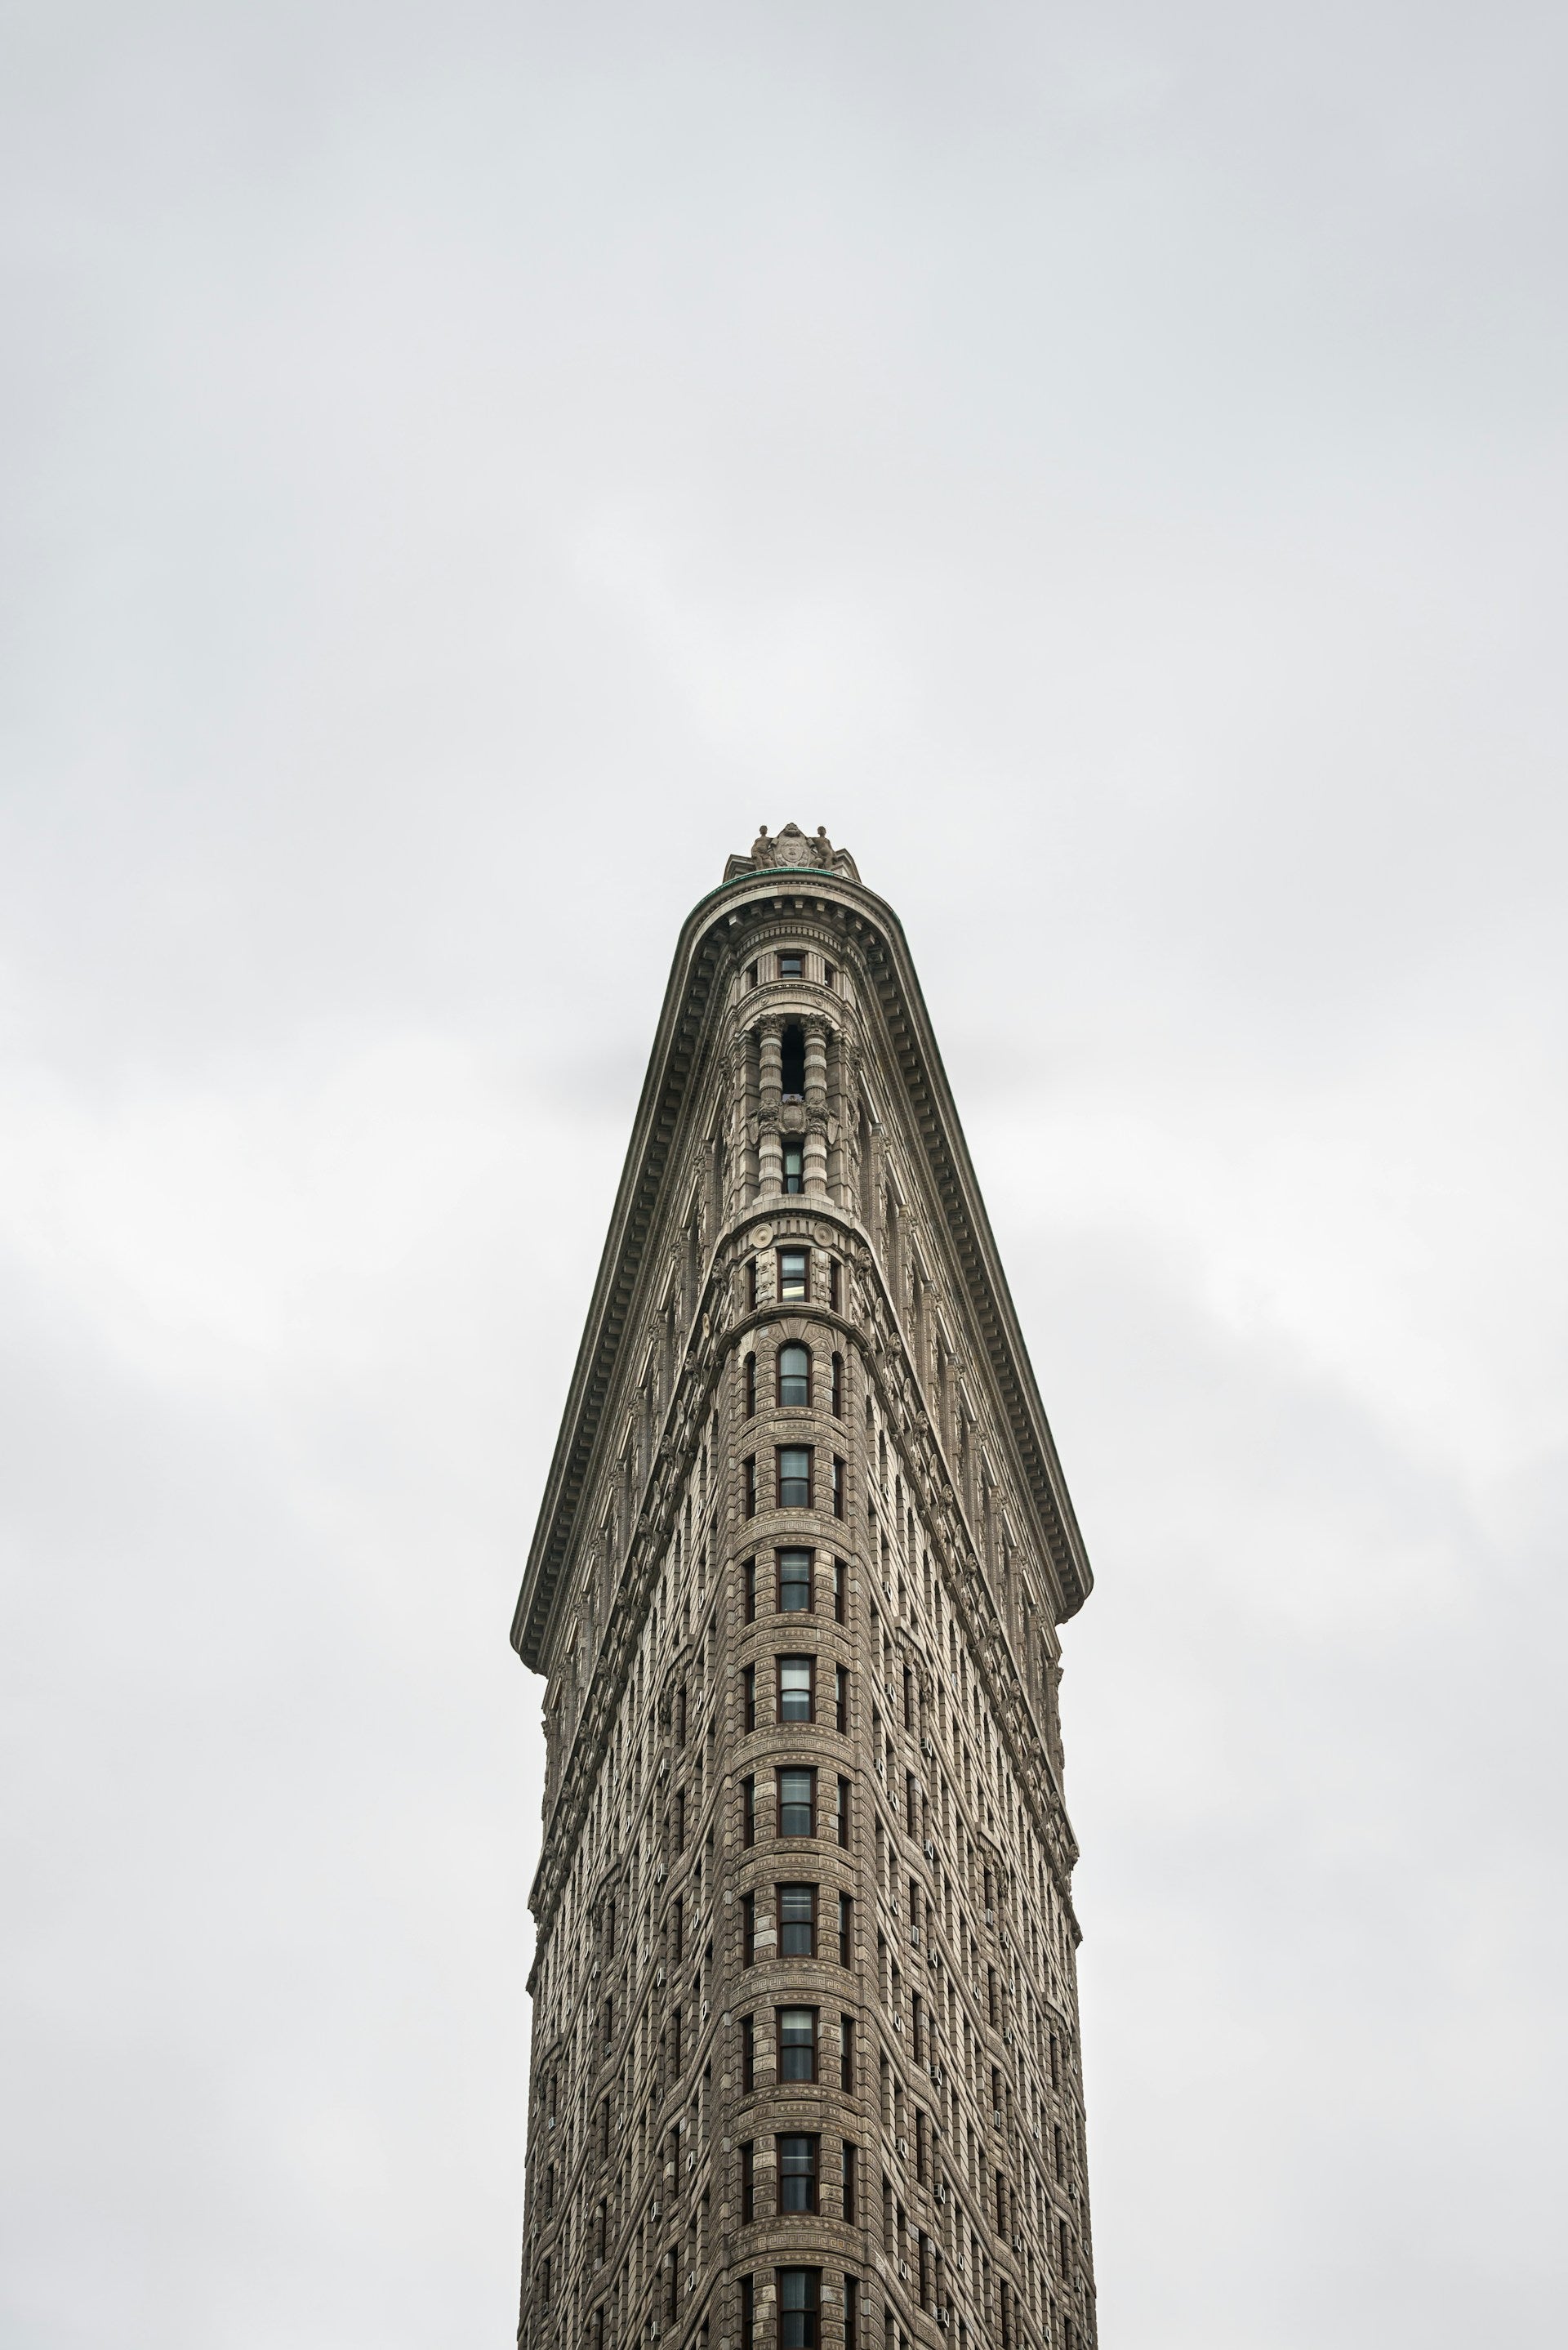 The flatiron building in New York city.